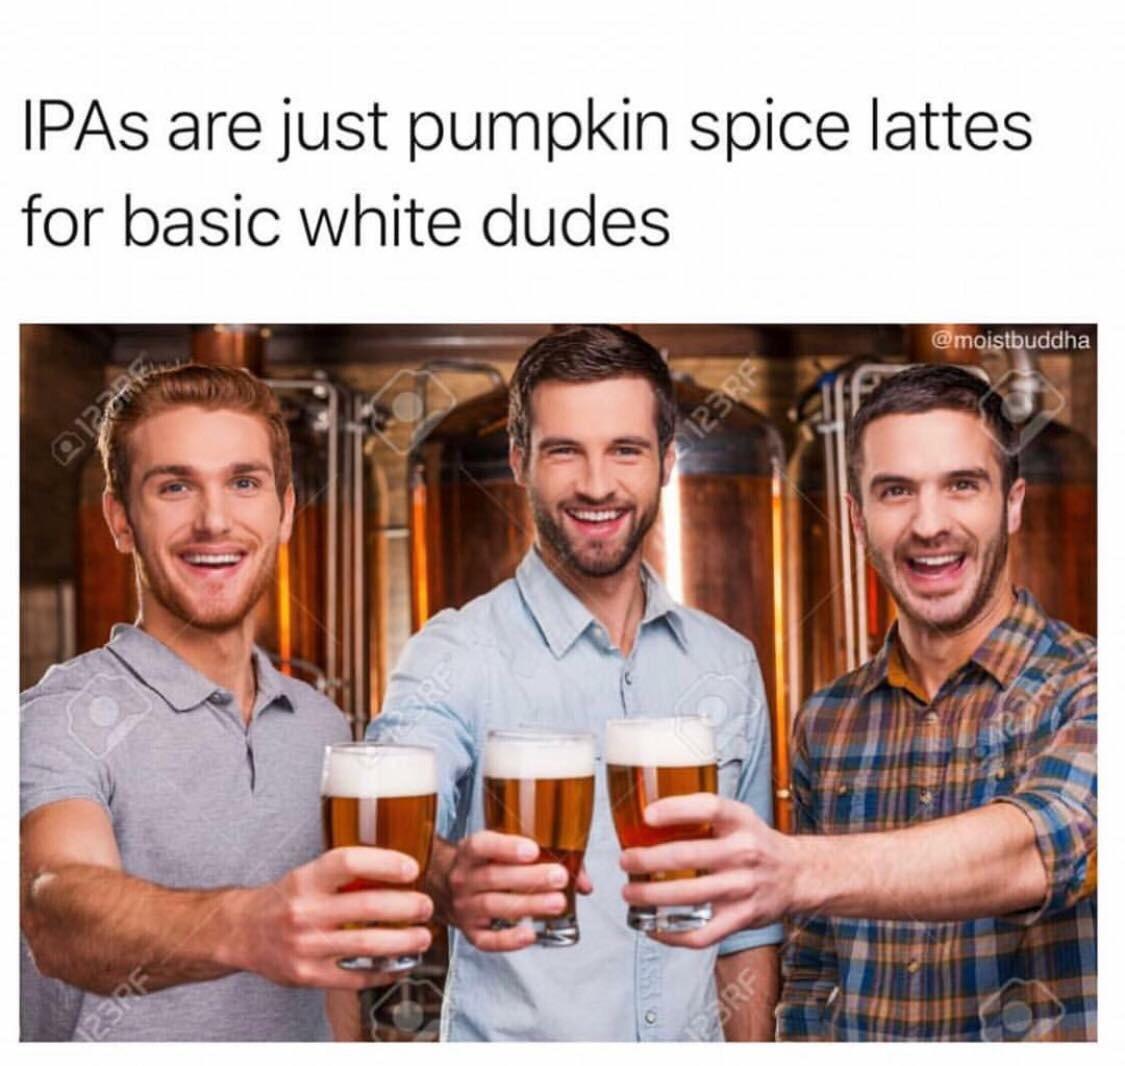 random pics -  ipa pumpkin spice meme - IPAs are just pumpkin spice lattes for basic white dudes 123RF 123RF Porf